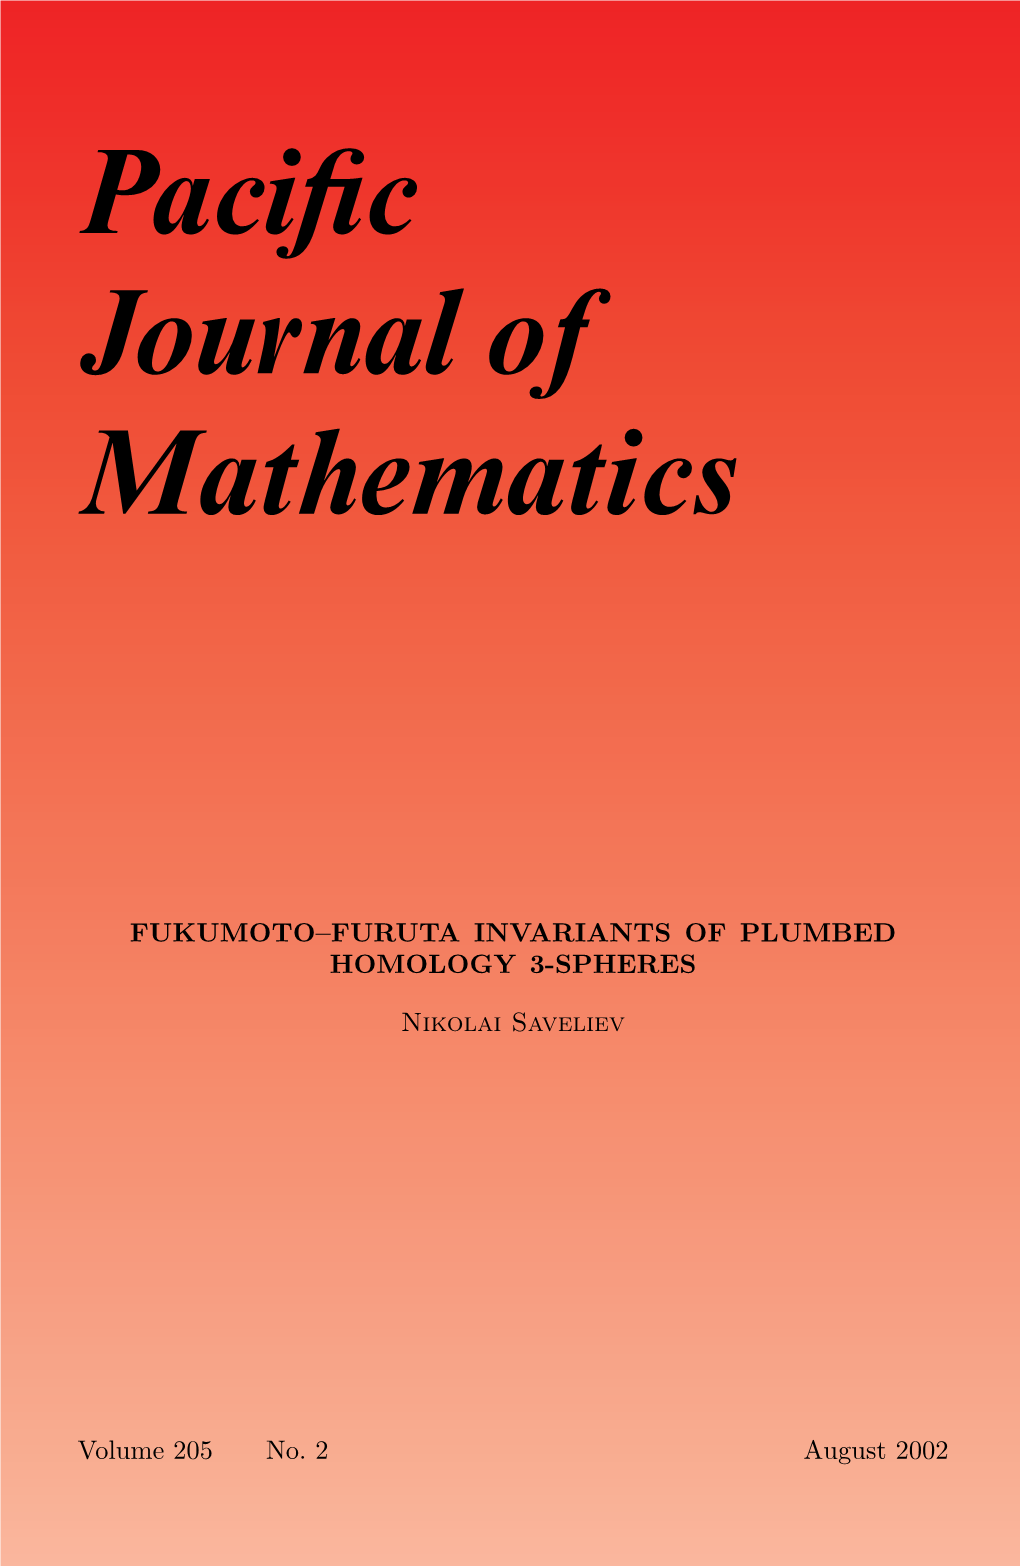 Fukumoto--Furuta Invariants of Plumbed Homology 3-Spheres